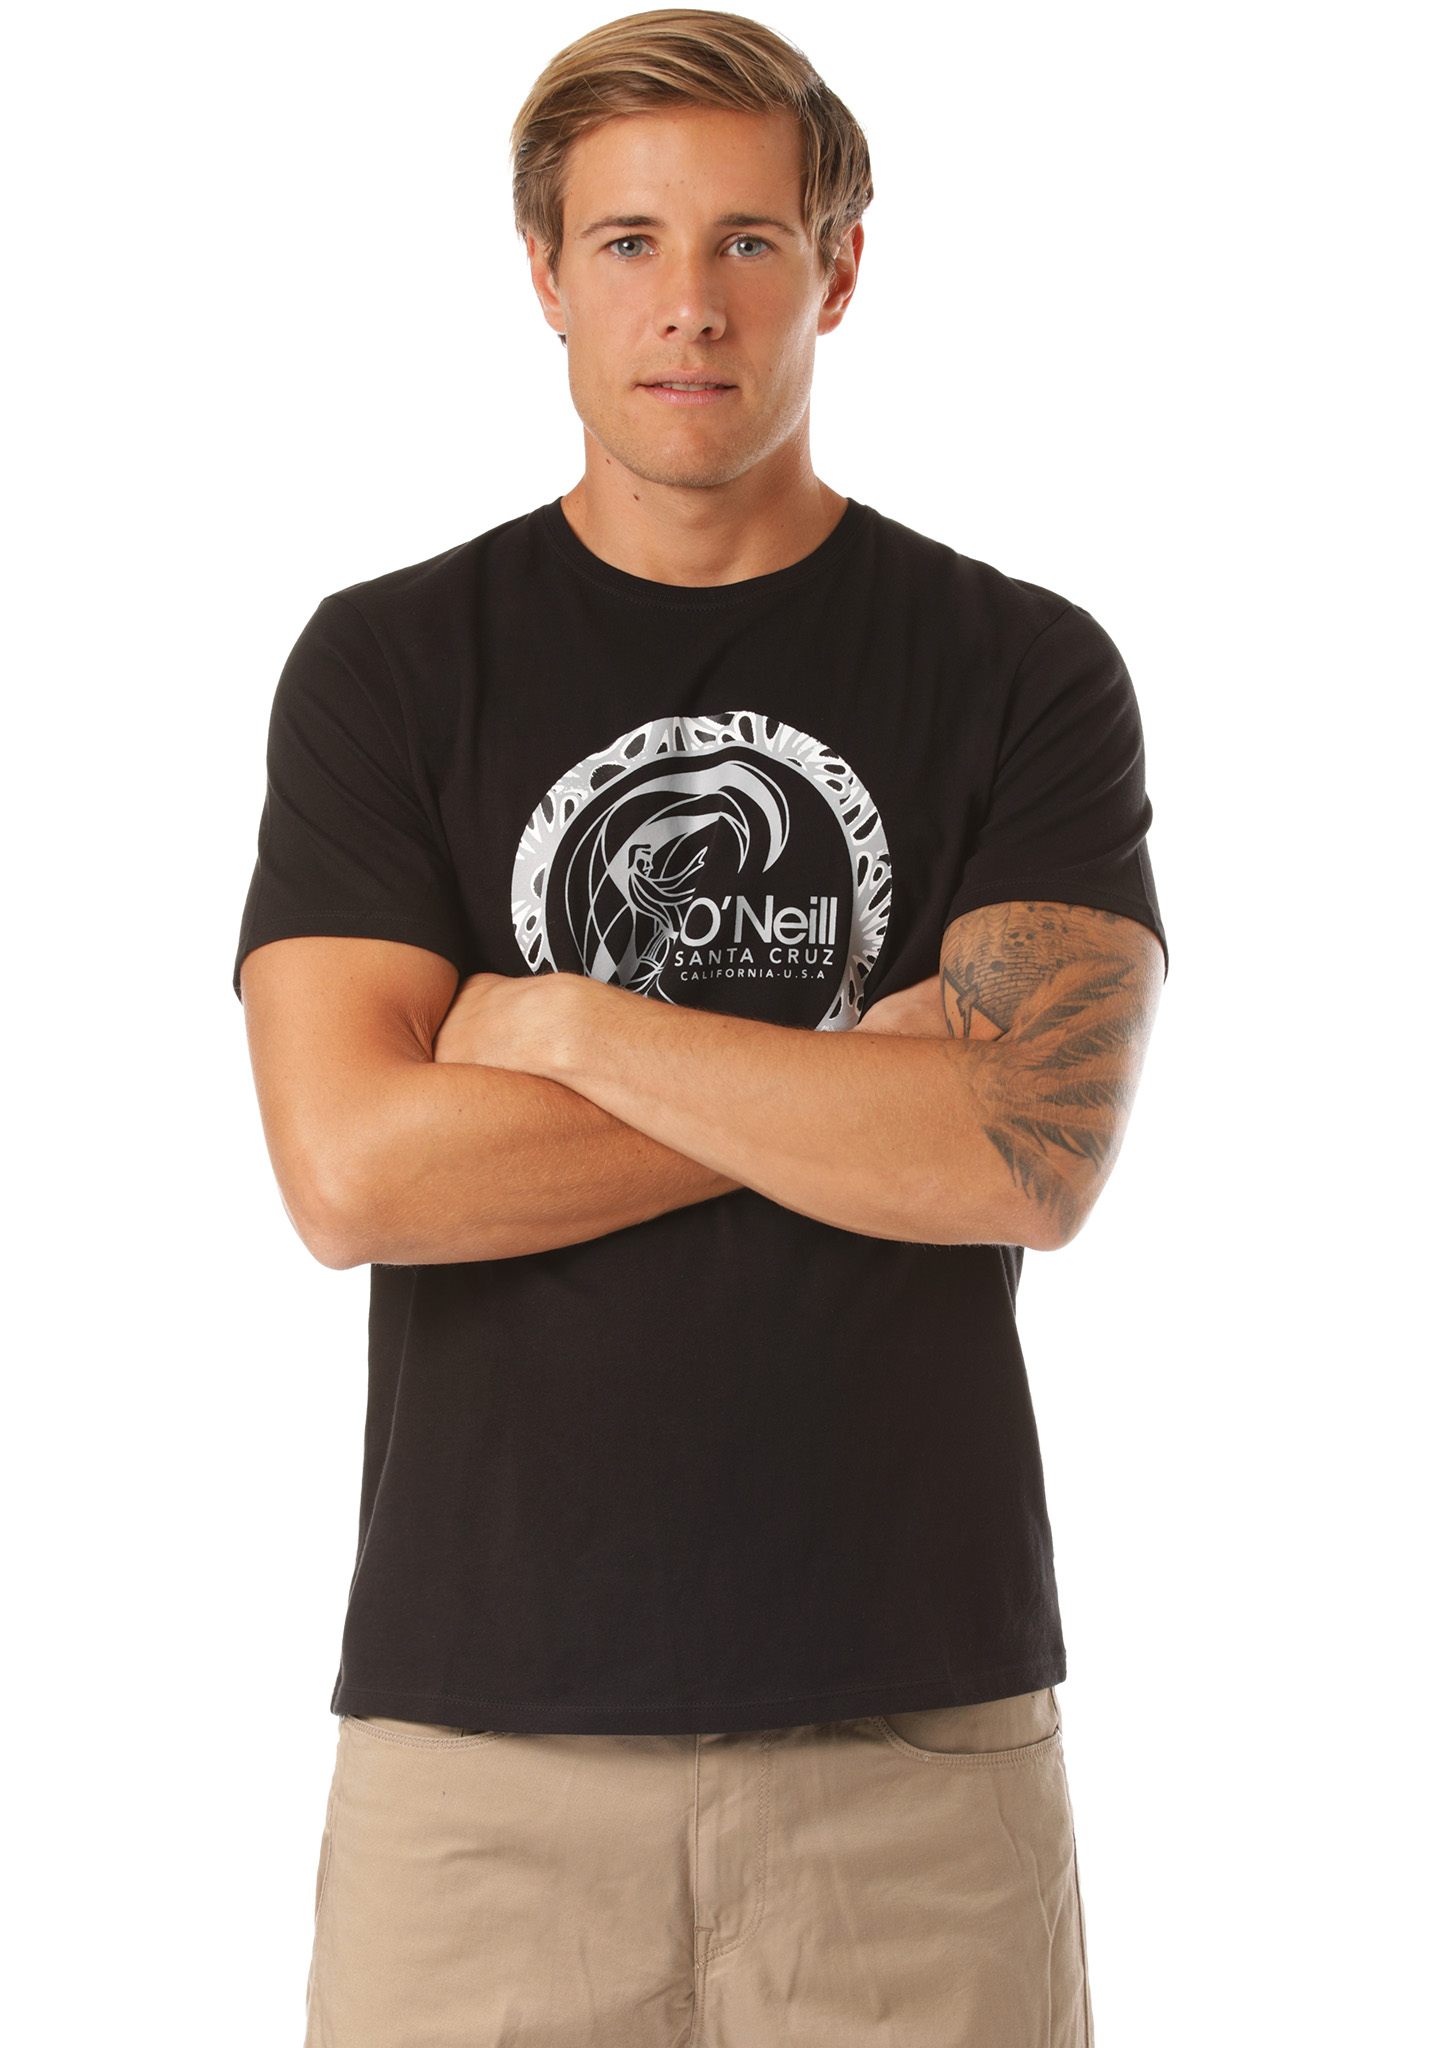 O'Neill Circle Surfer T-Shirt